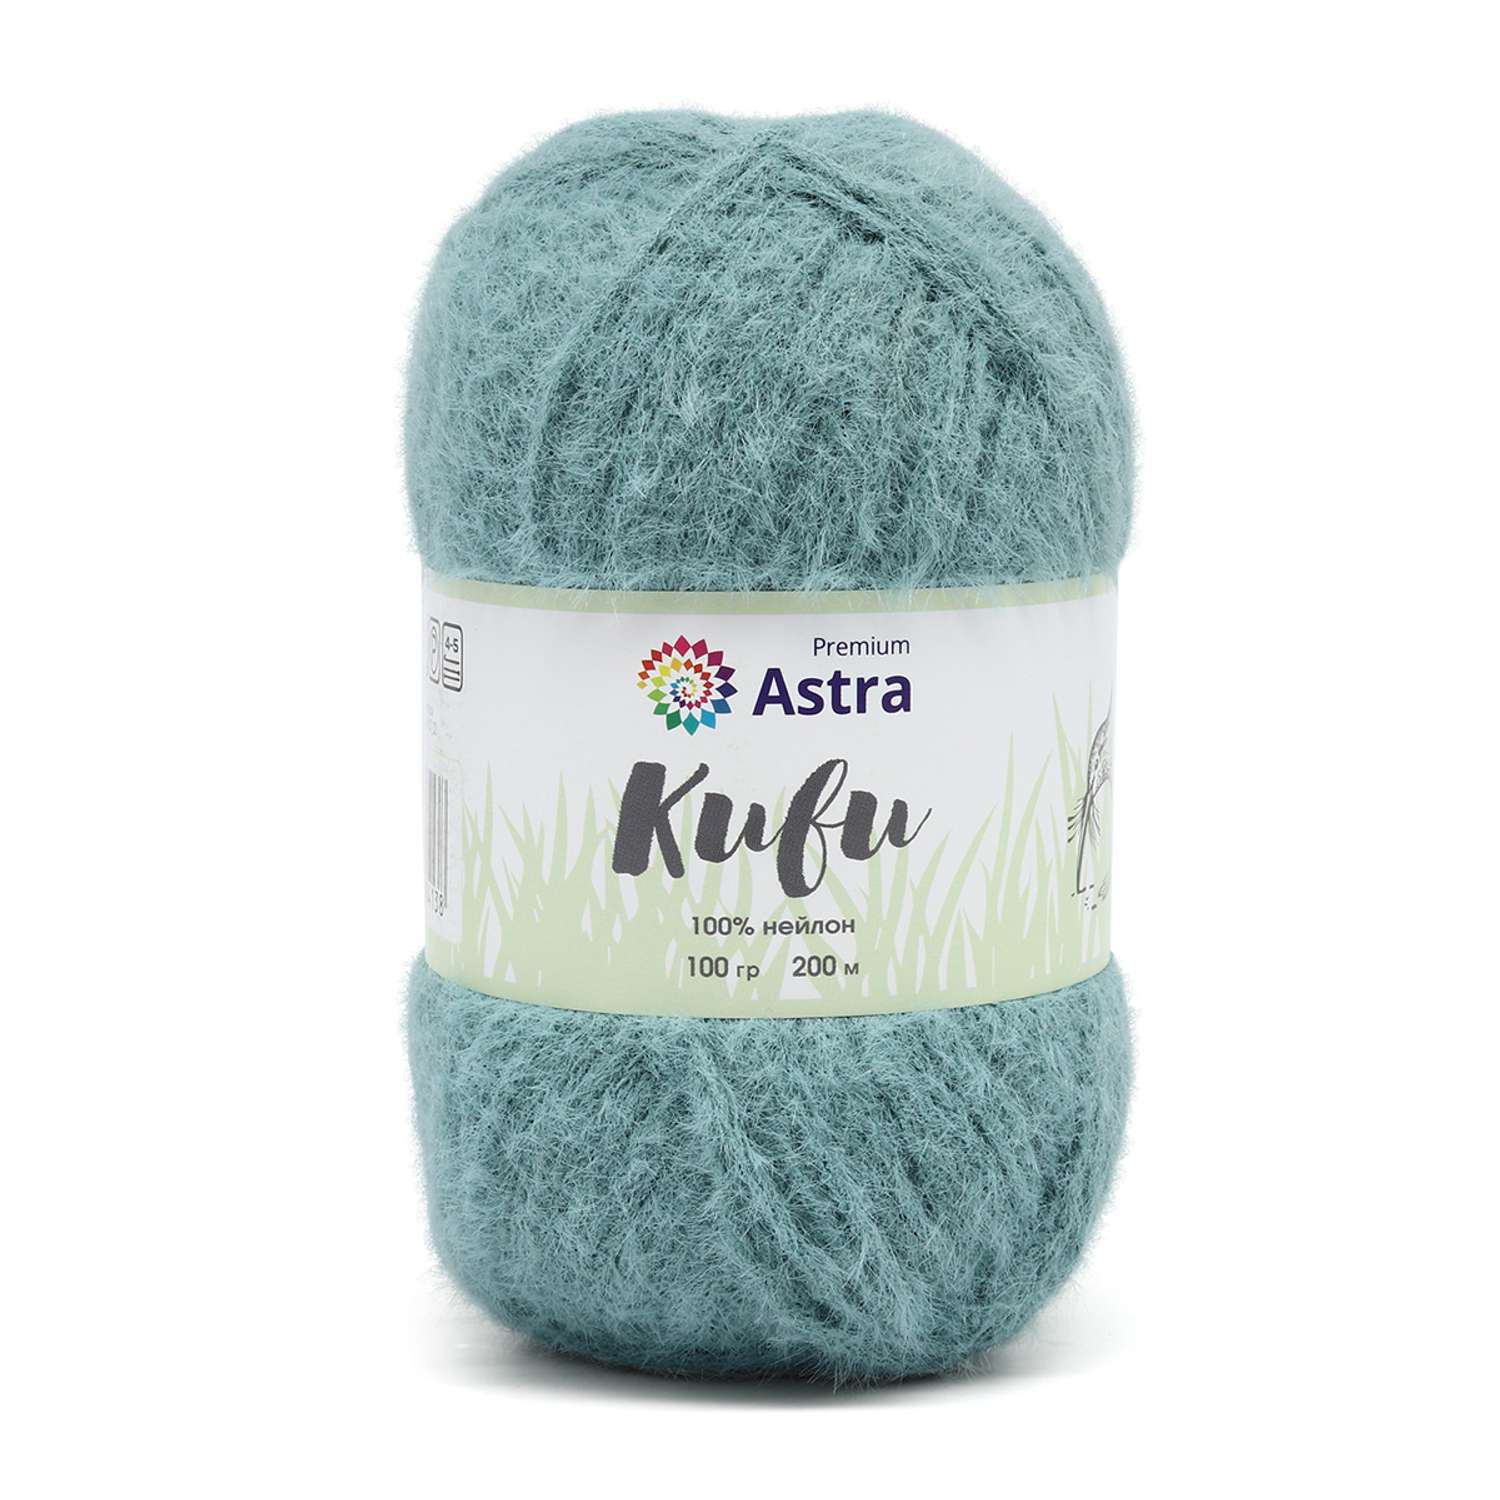 Пряжа для вязания Astra Premium киви фантазийная с выраженным ворсом киви нейлон 100 гр 200 м 01 голубой 3 мотка - фото 9